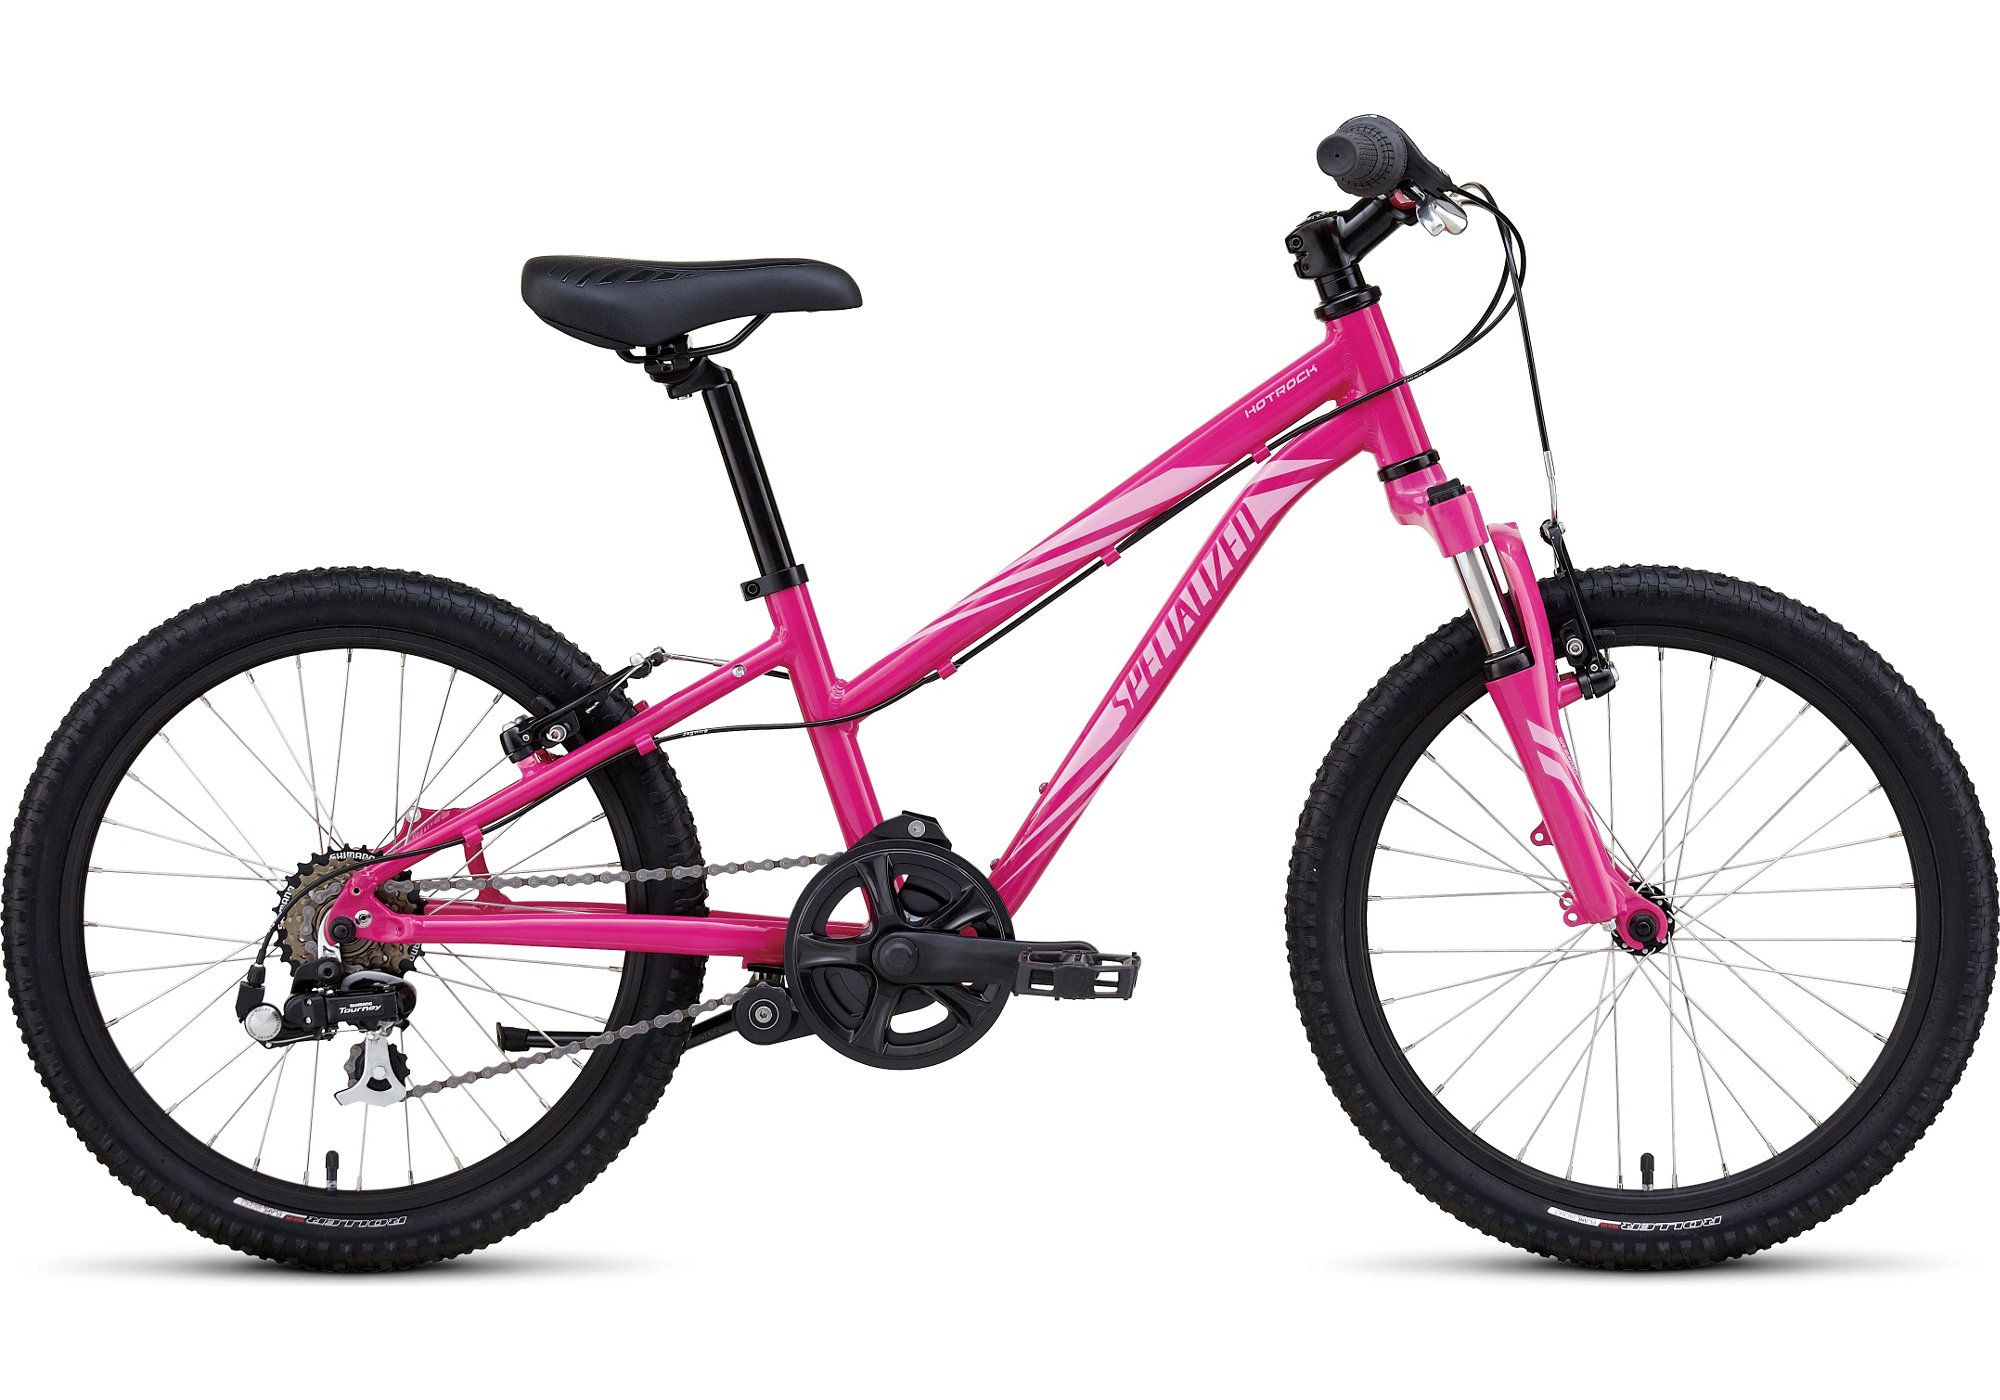  Отзывы о Детском велосипеде Specialized Hotrock 20 6 speed girl Int 2016